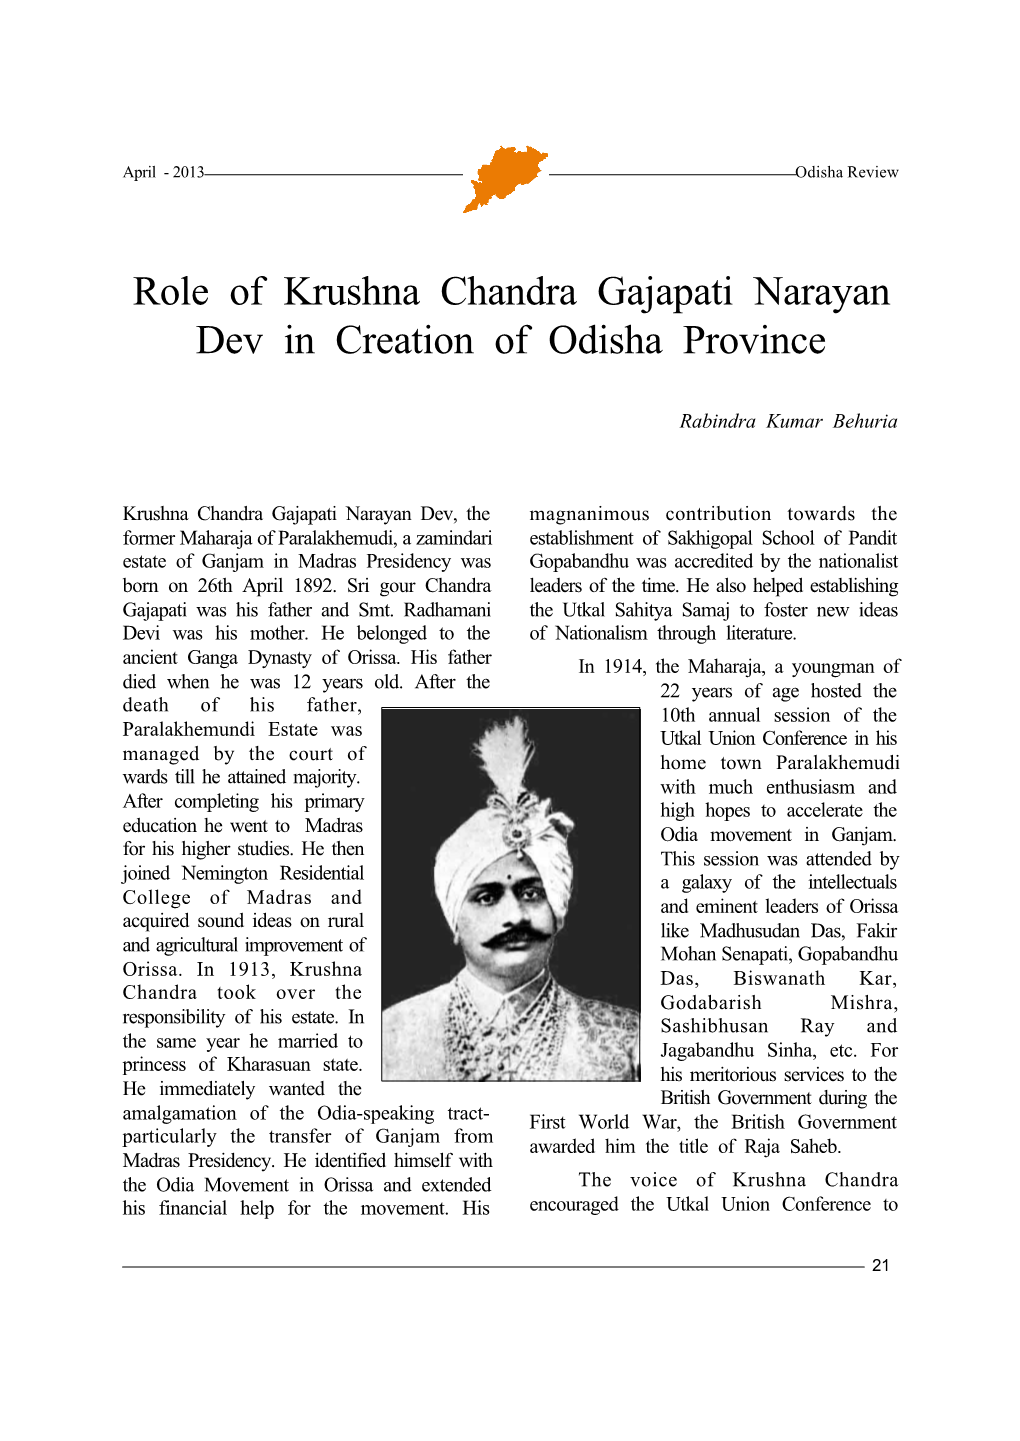 Role of Krushna Chandra Gajapati Narayan Dev in Creation of Odisha Province